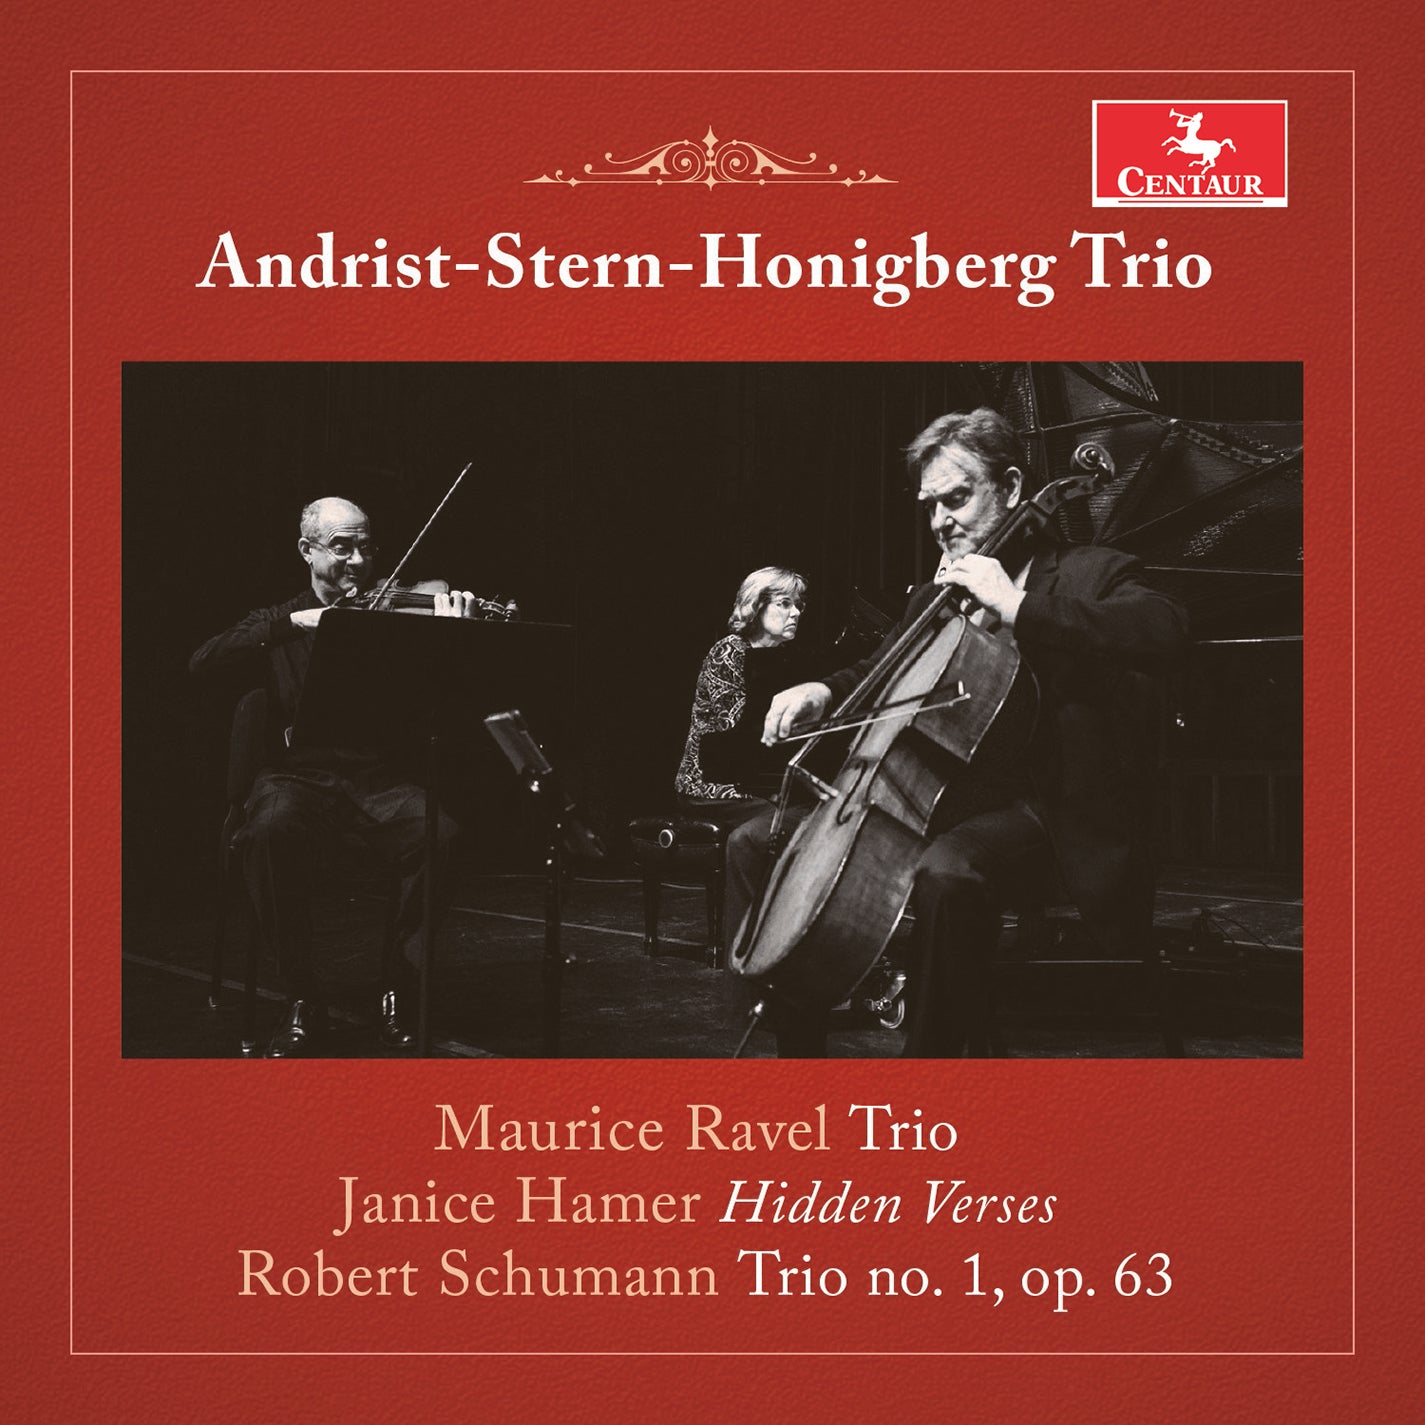 Ravel, Hamer, & Schumann / Andrist-Stern-Honigberg Trio